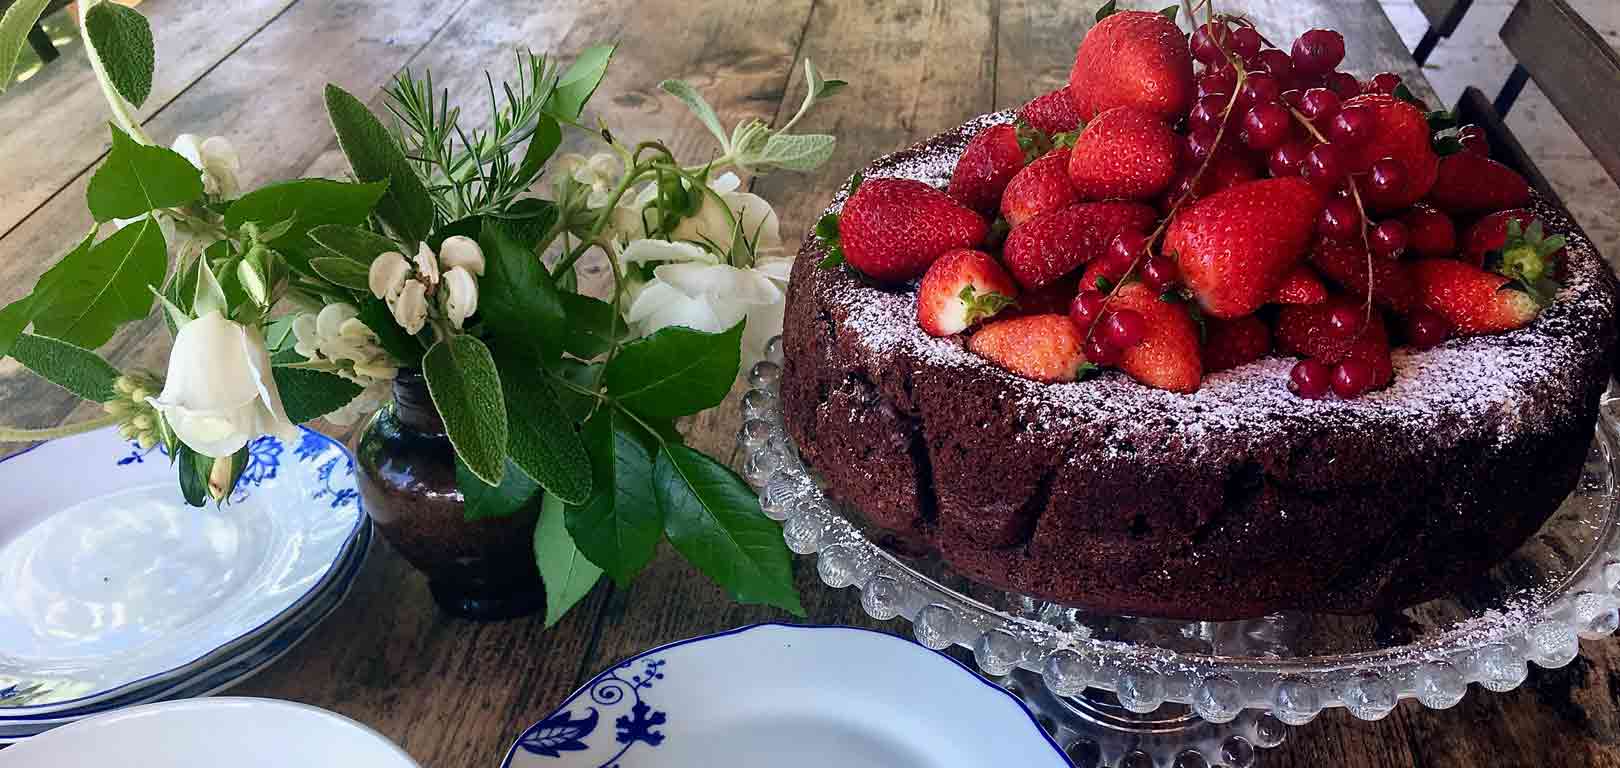 Torta Caprese: Italian Almond Cake Recipe With Chocolate